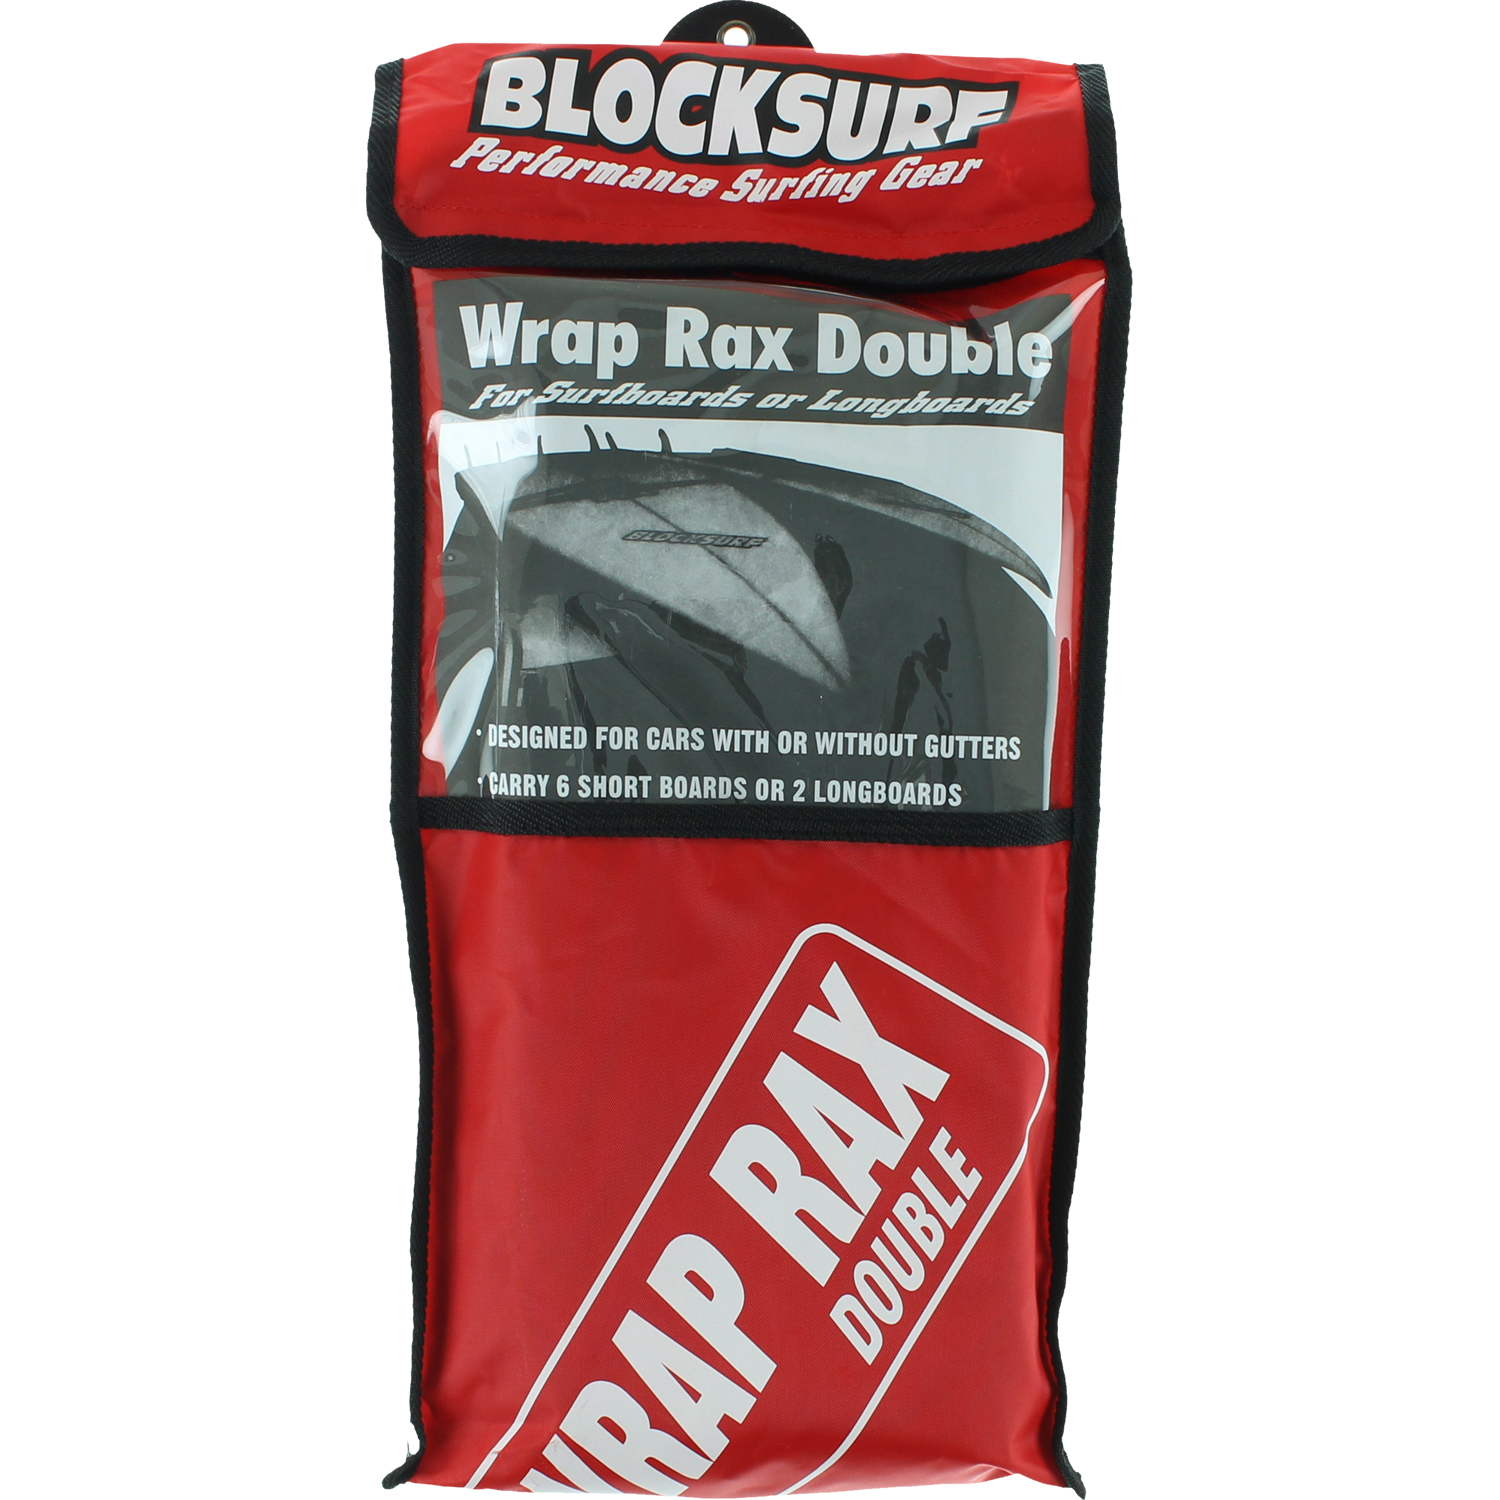 Blocksurf Wrap Rax Double